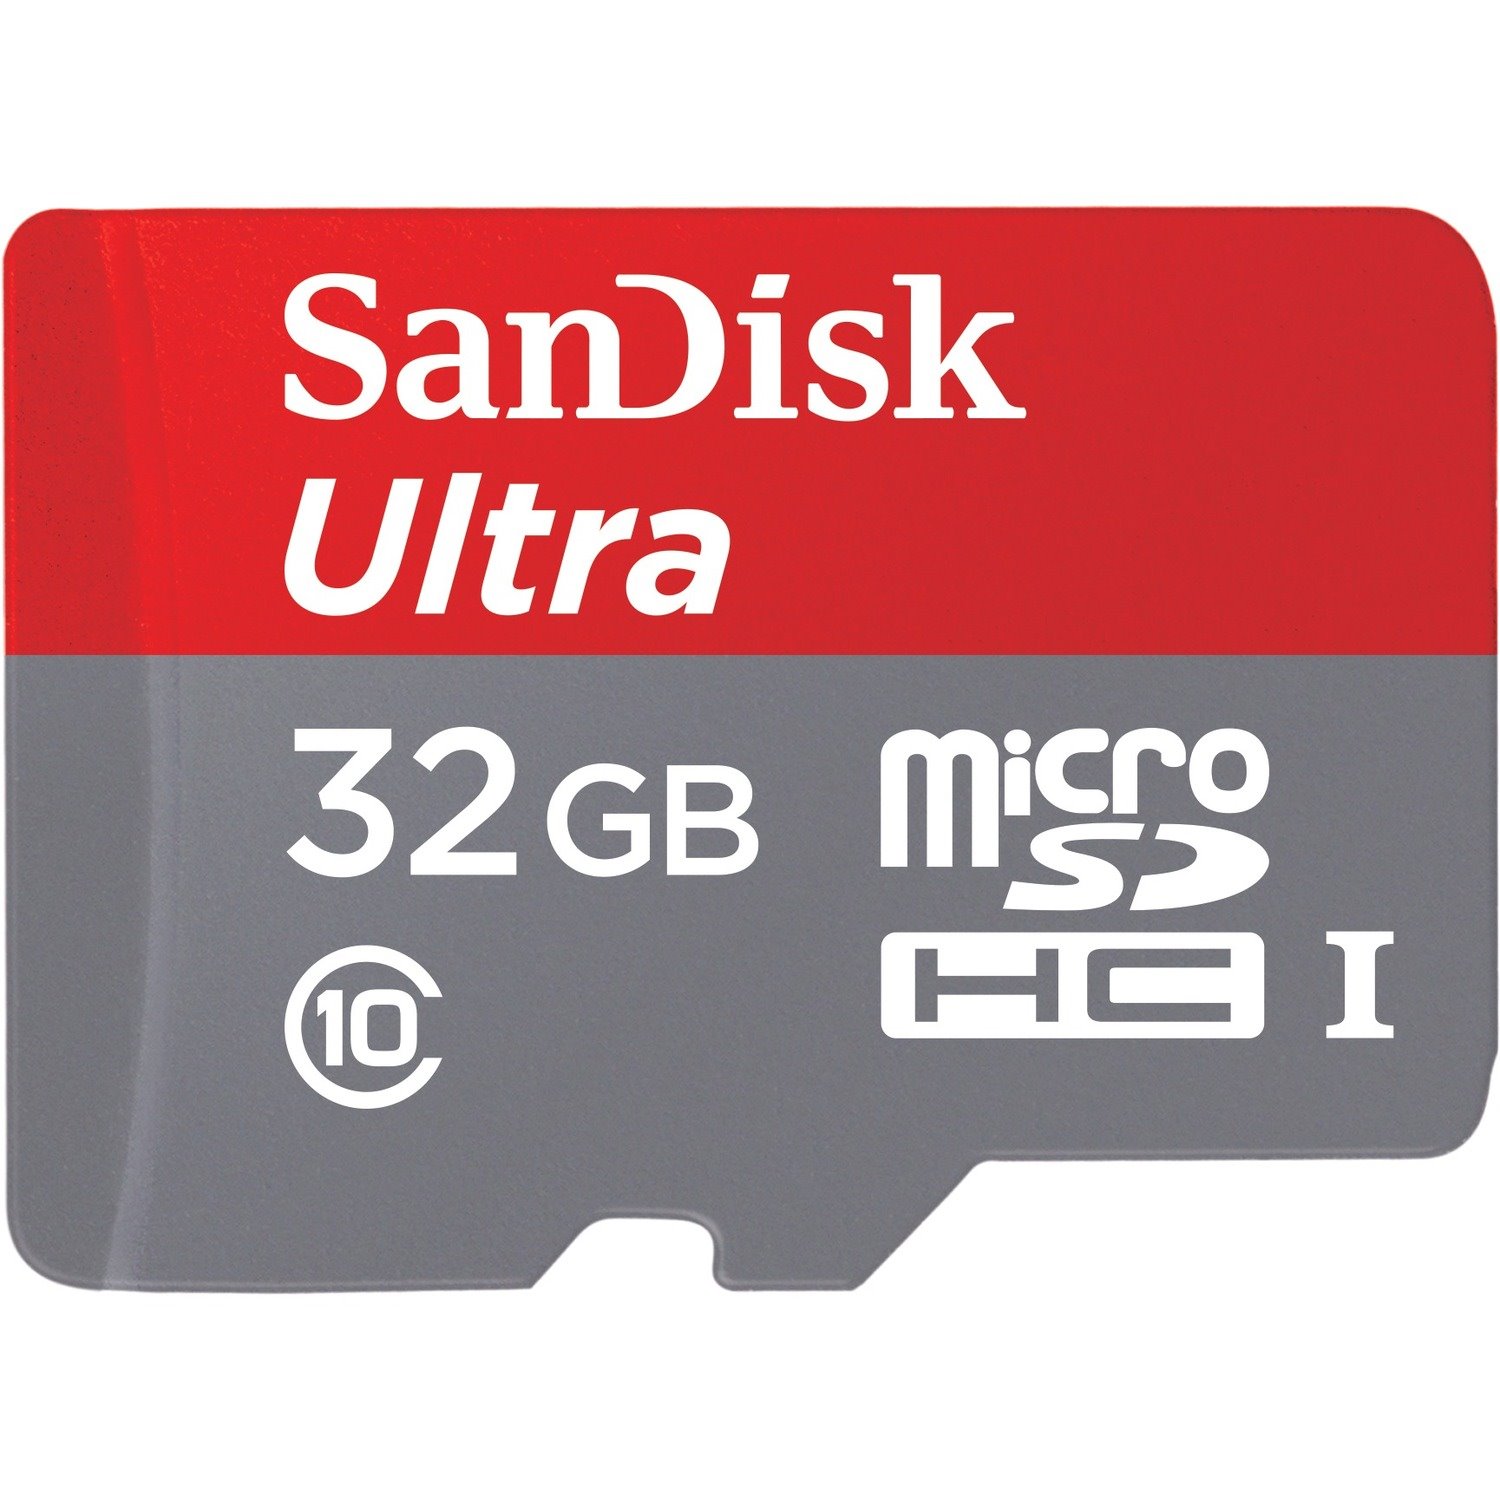 SanDisk Ultra 32 GB UHS-I microSDXC